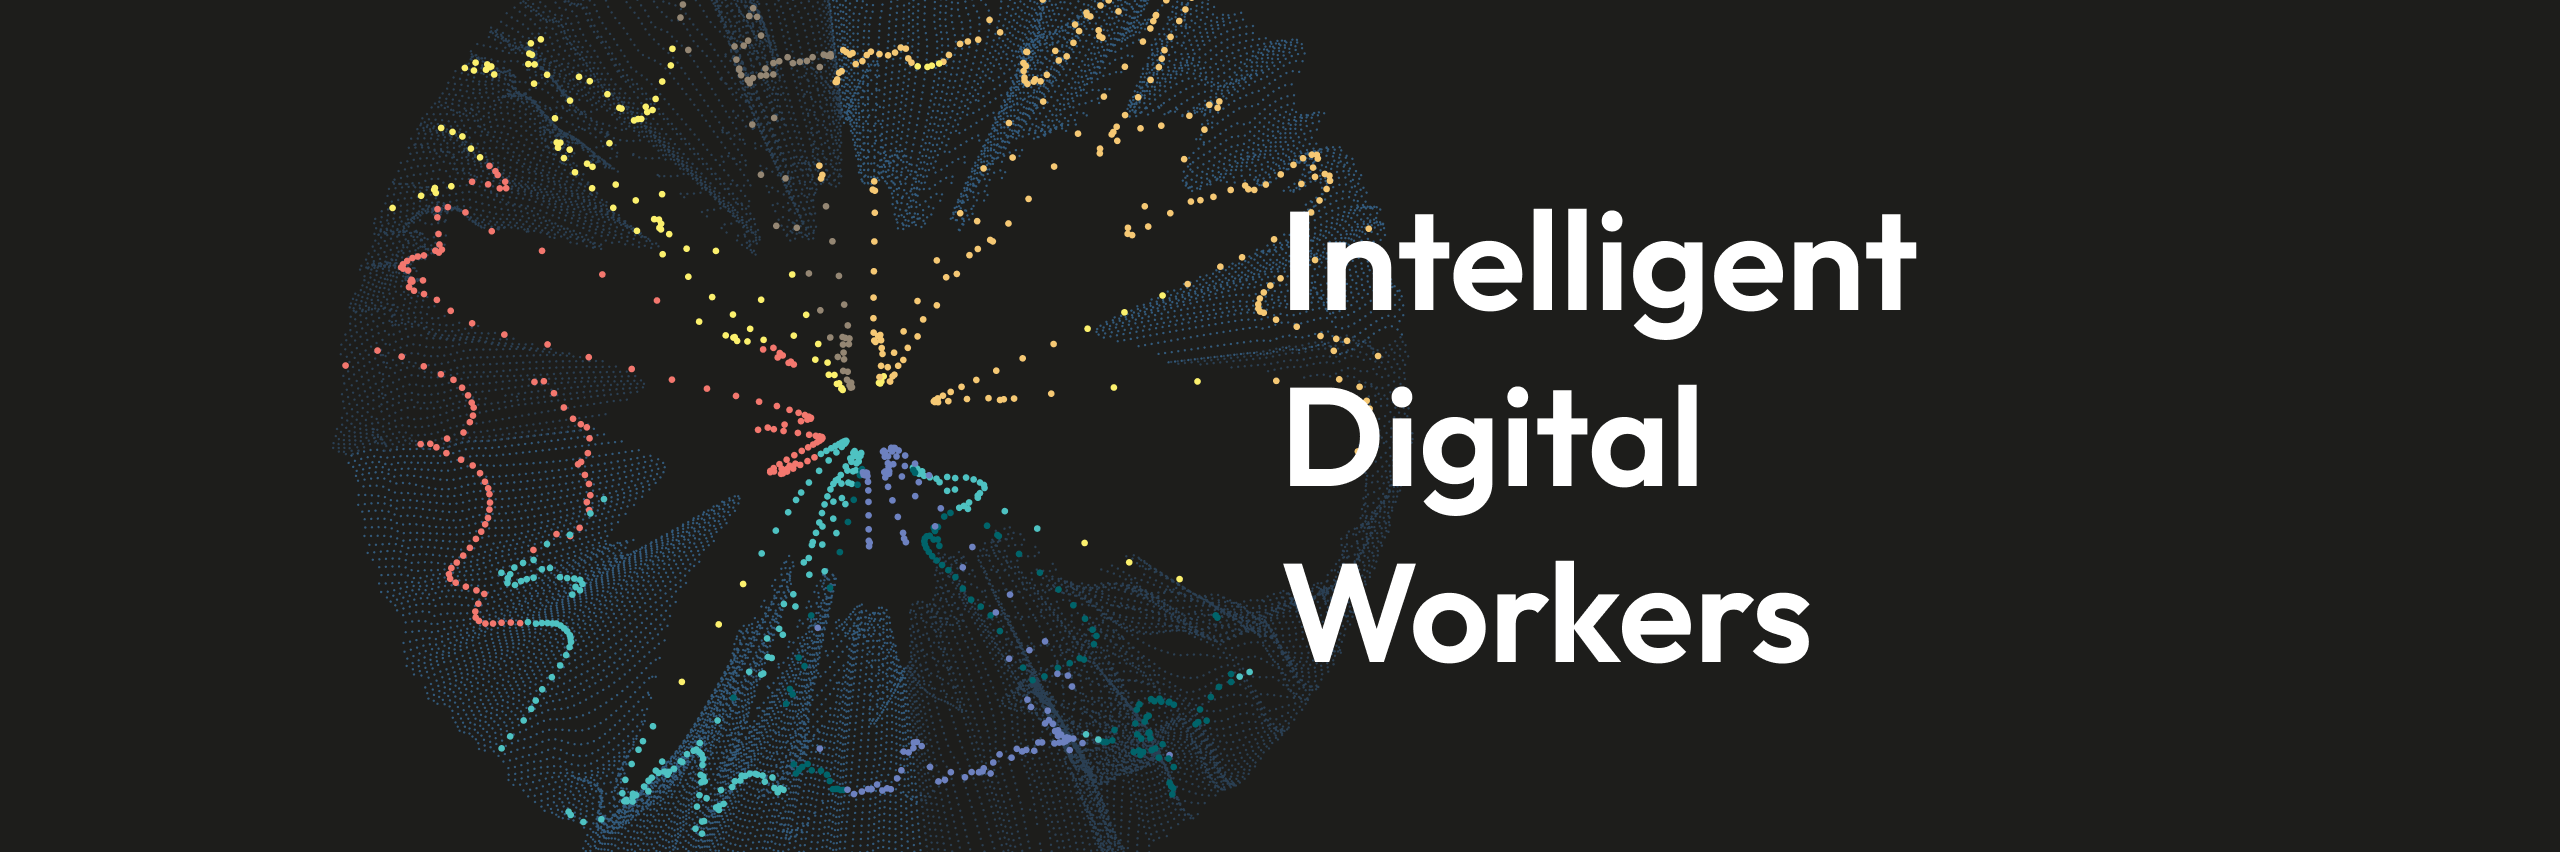 Meet the Intelligent Digital Worker, Your New AI Teammate